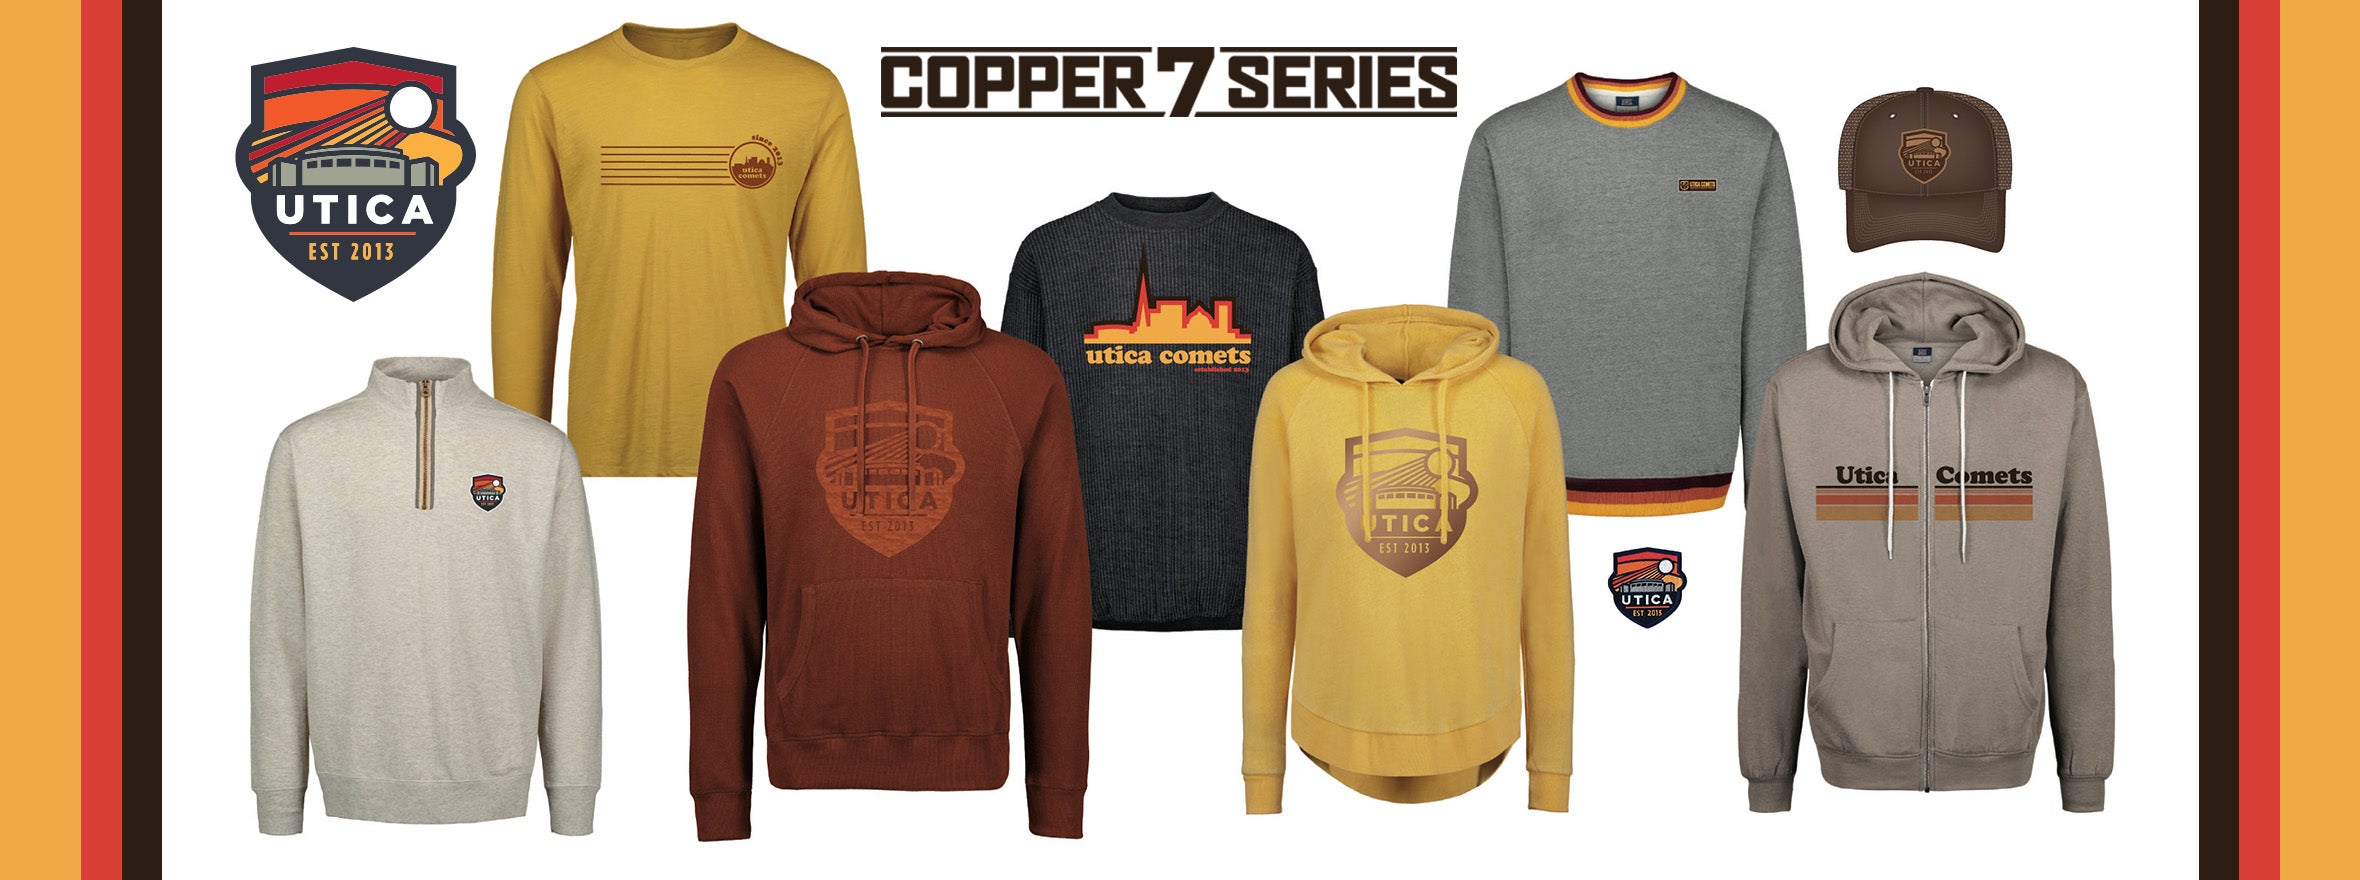 Utica Comets honor seven seasons with Copper 7 Series